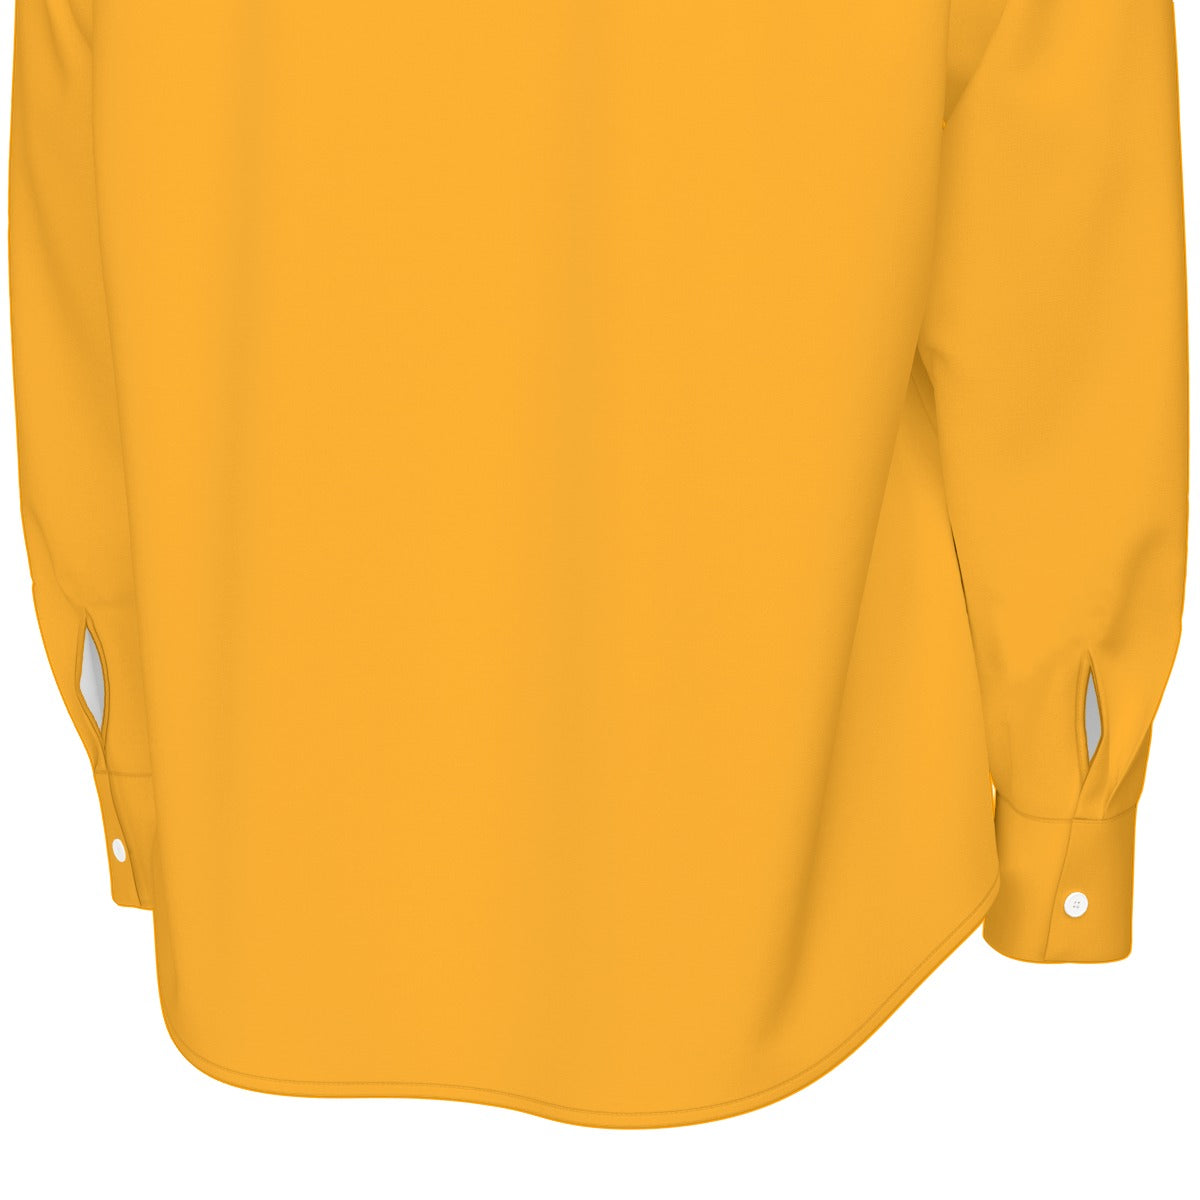 Sixty Eight 93 Logo White Orange Men's Cotton Long Sleeve Shirt